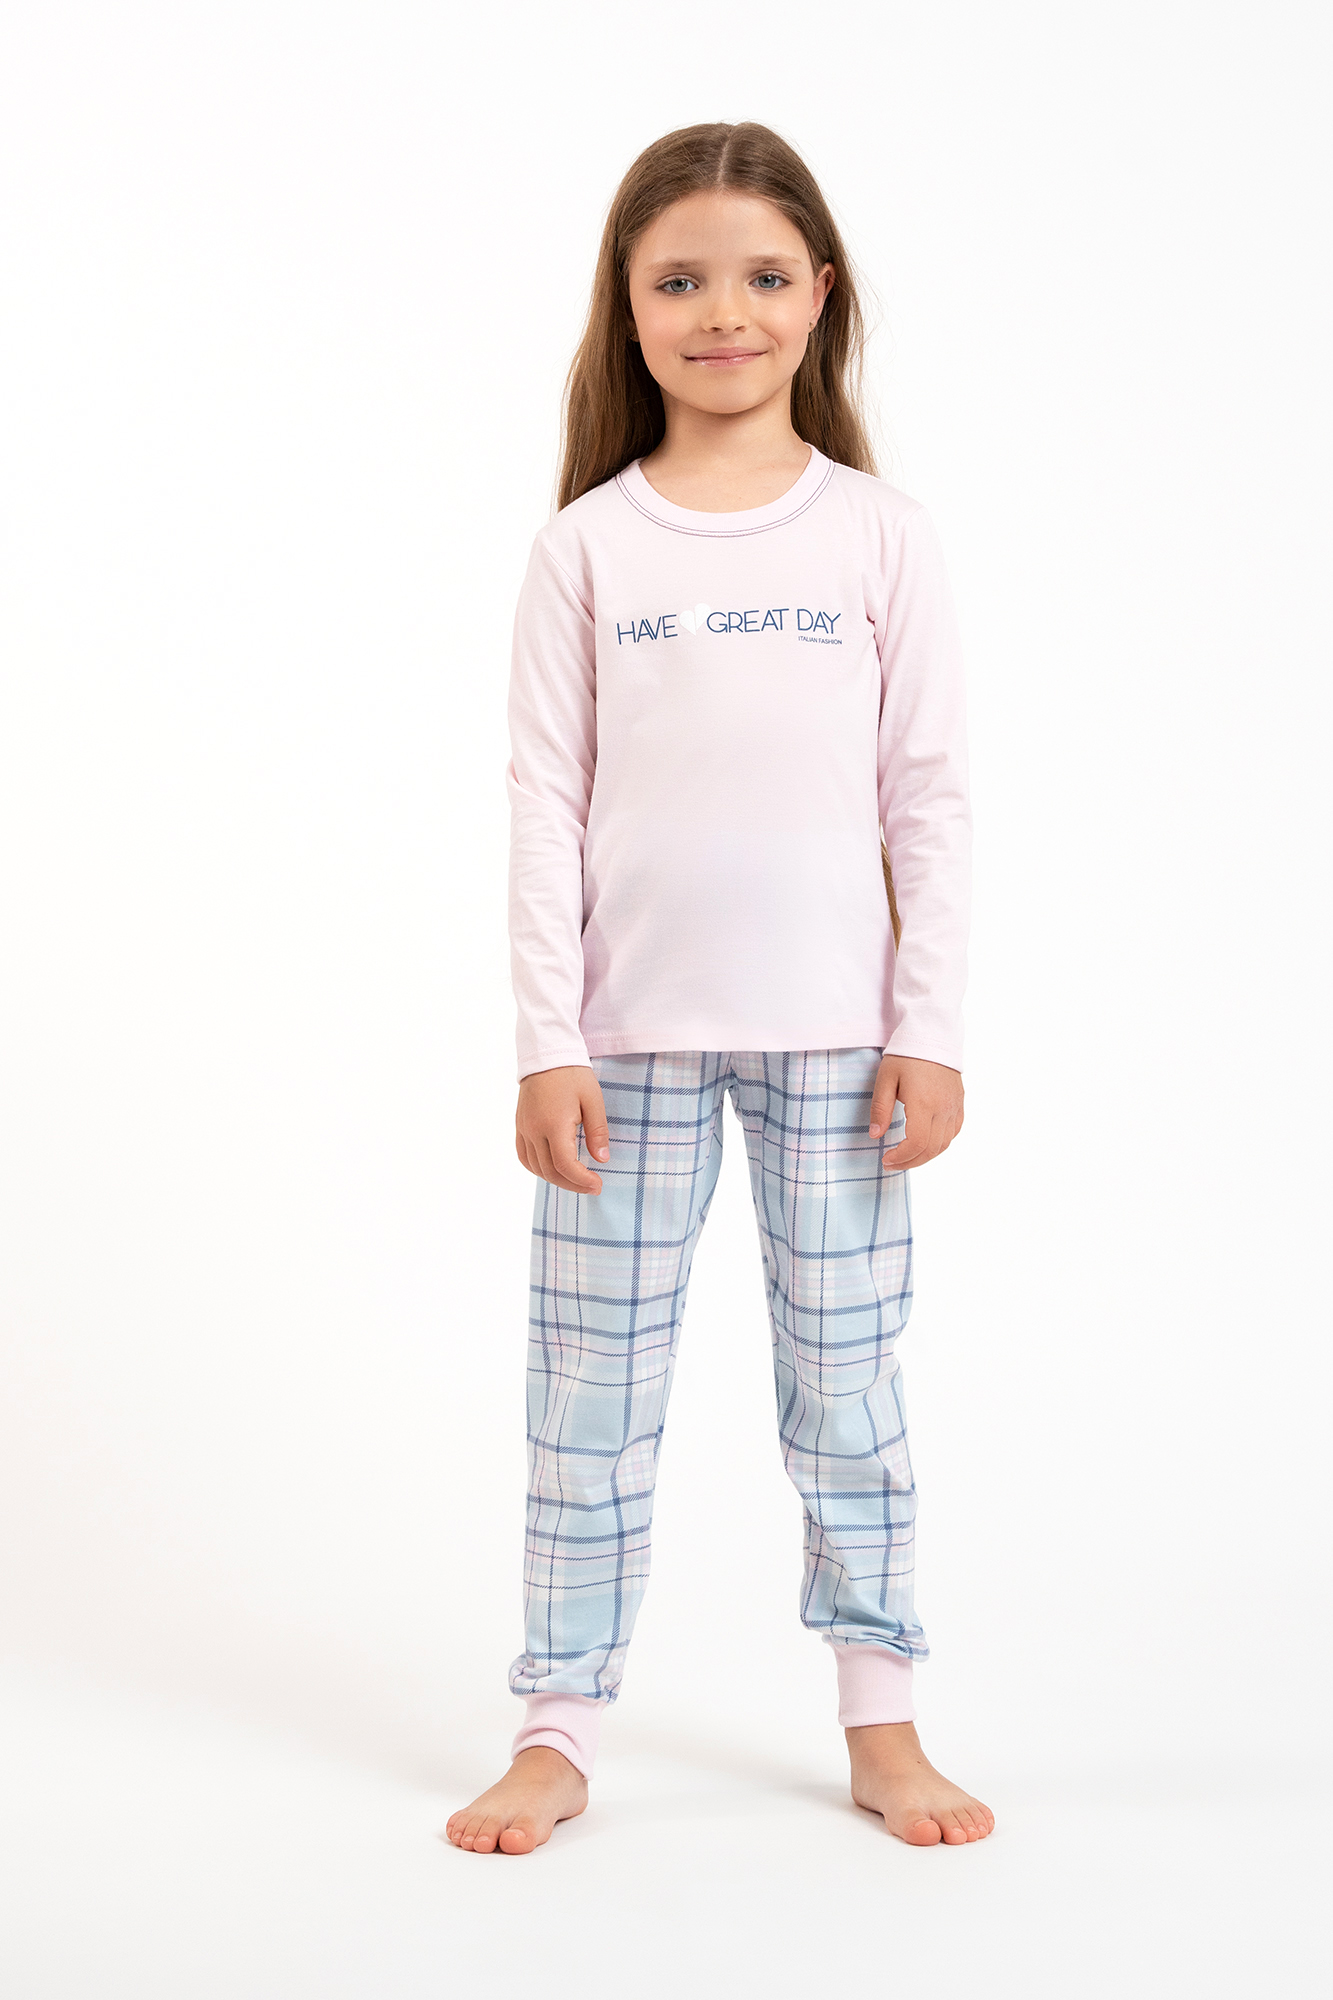 Girls' pyjamas Glamour, long sleeves, long pants - pink/print